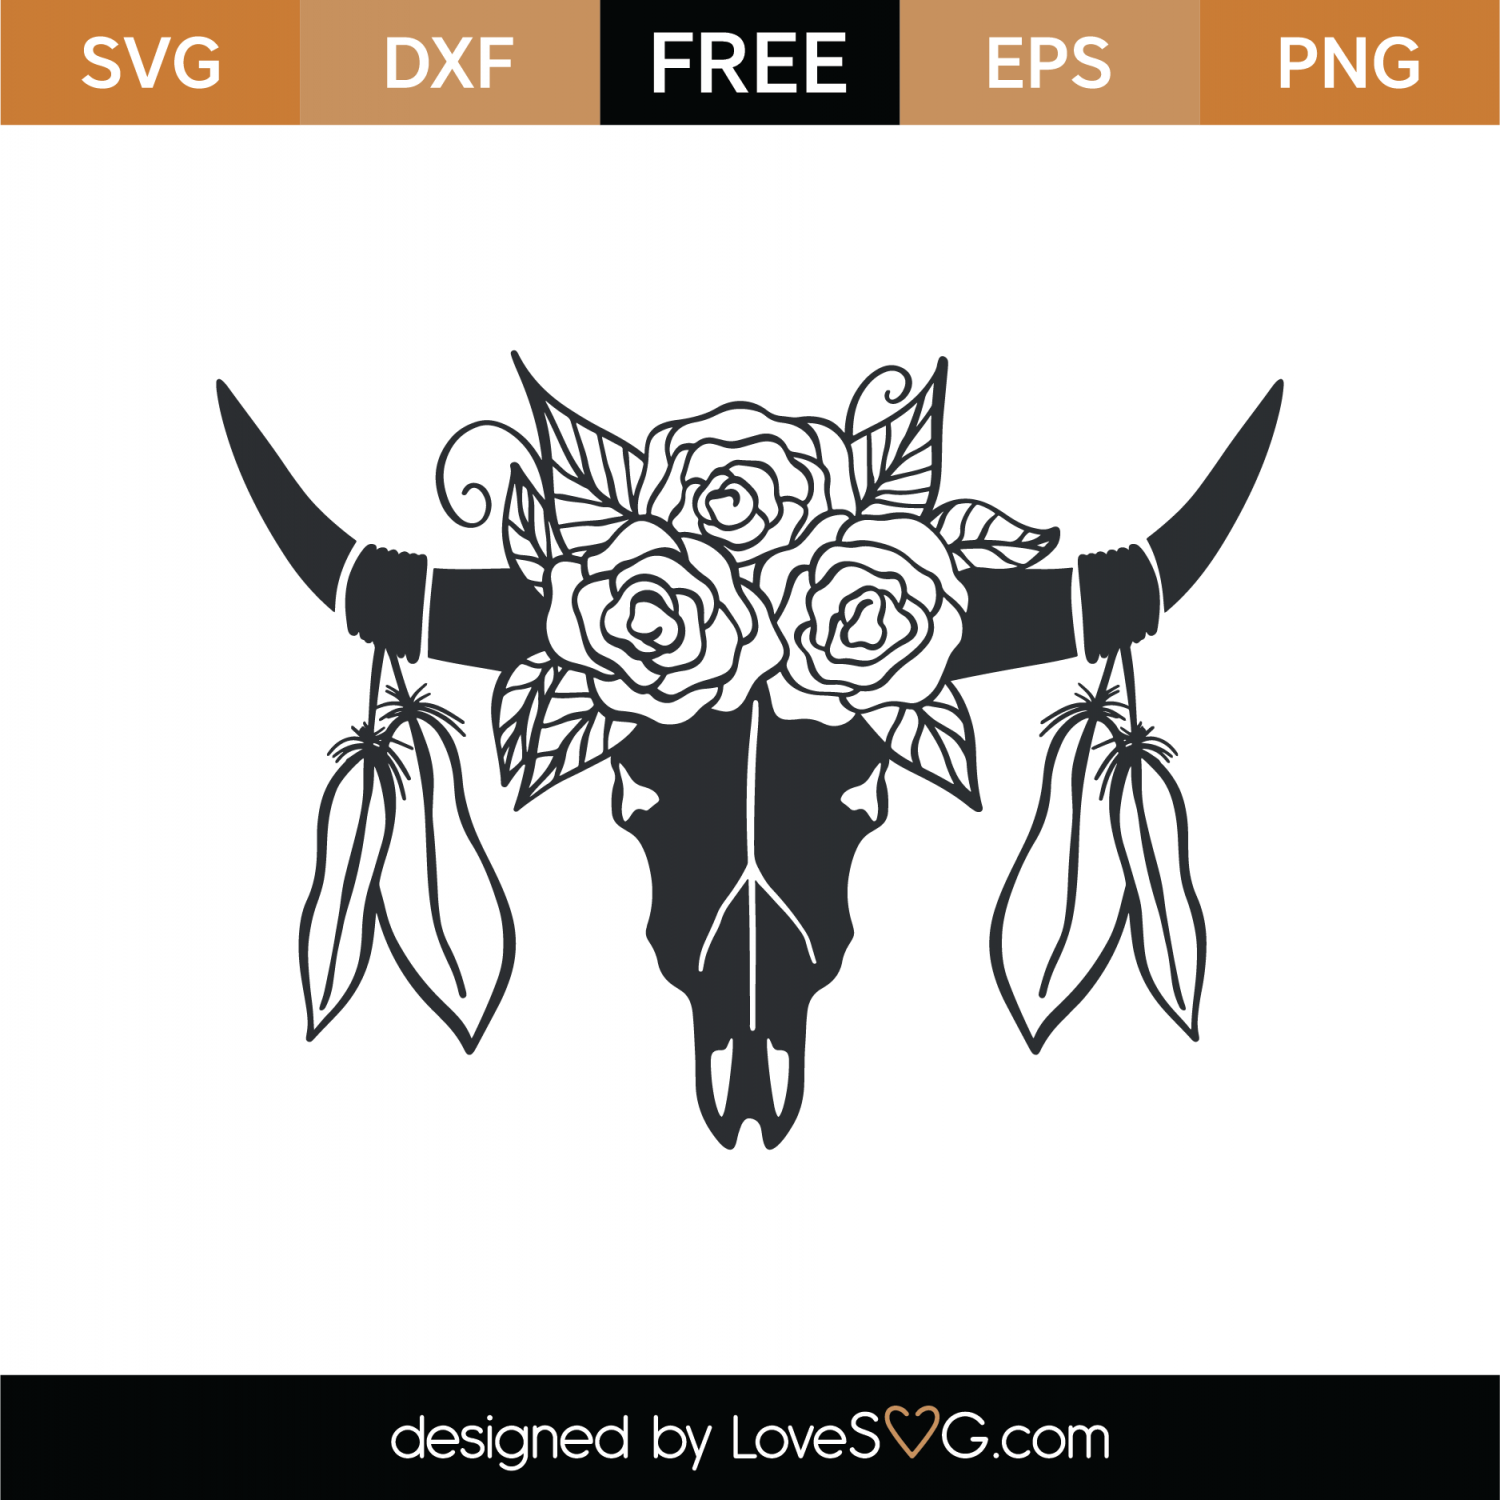 Download Free Floral Skull Bull SVG Cut File | Lovesvg.com